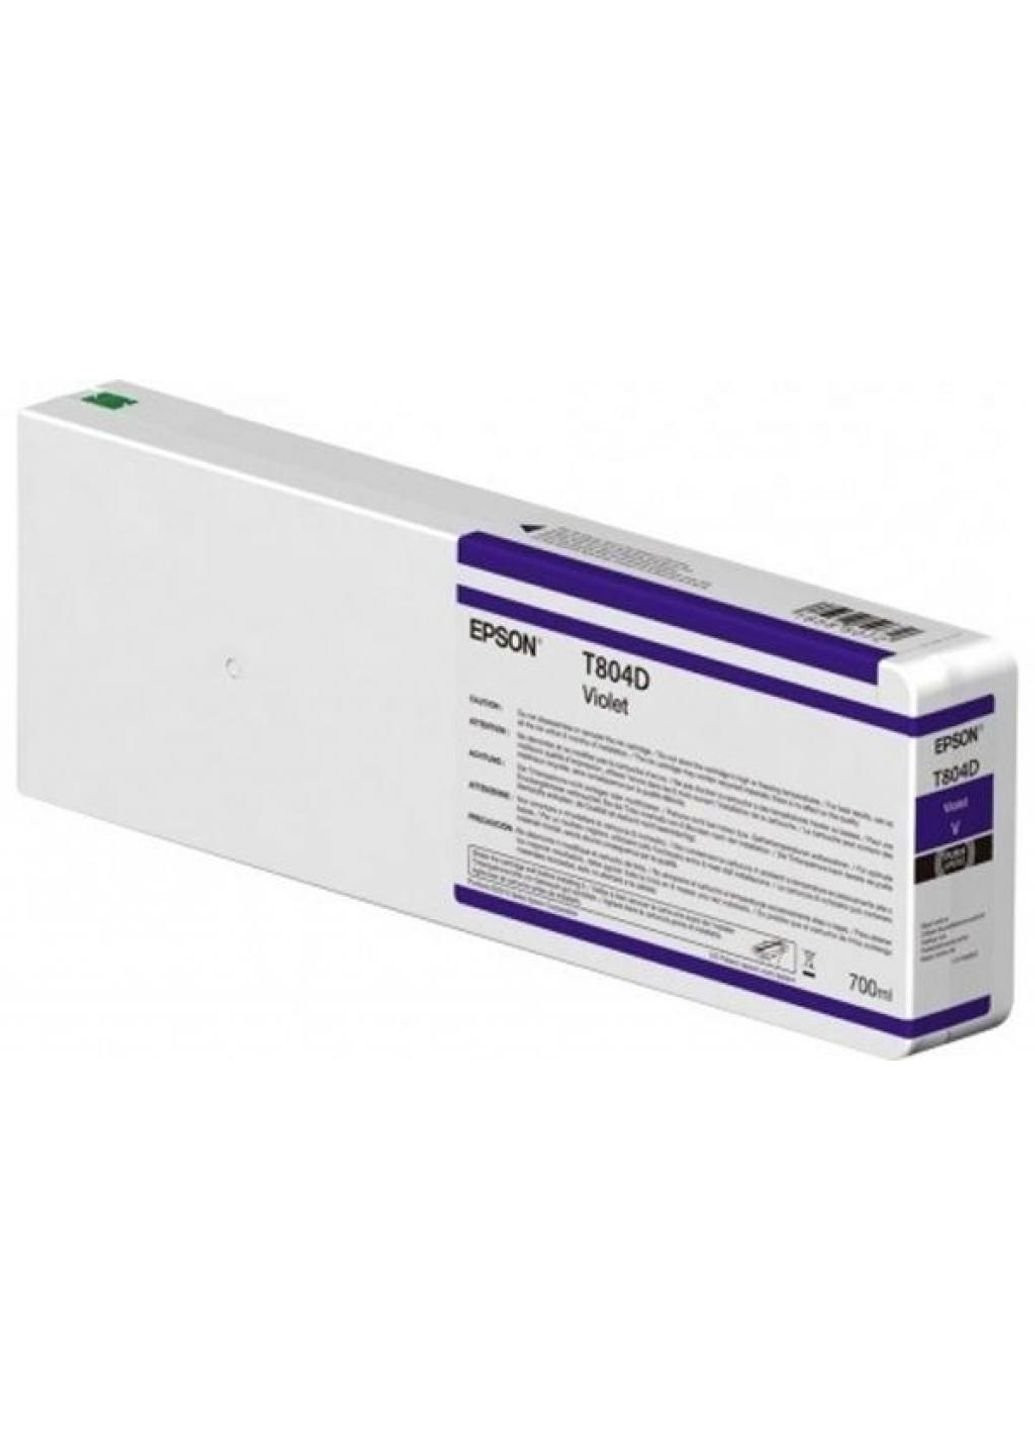 Картридж SC-P6000 / P7000 / P8000 / P9000 Violet 700мл (C13T804D00) Epson sc-p6000/p7000/p8000/p9000 violet 700мл (247614580)